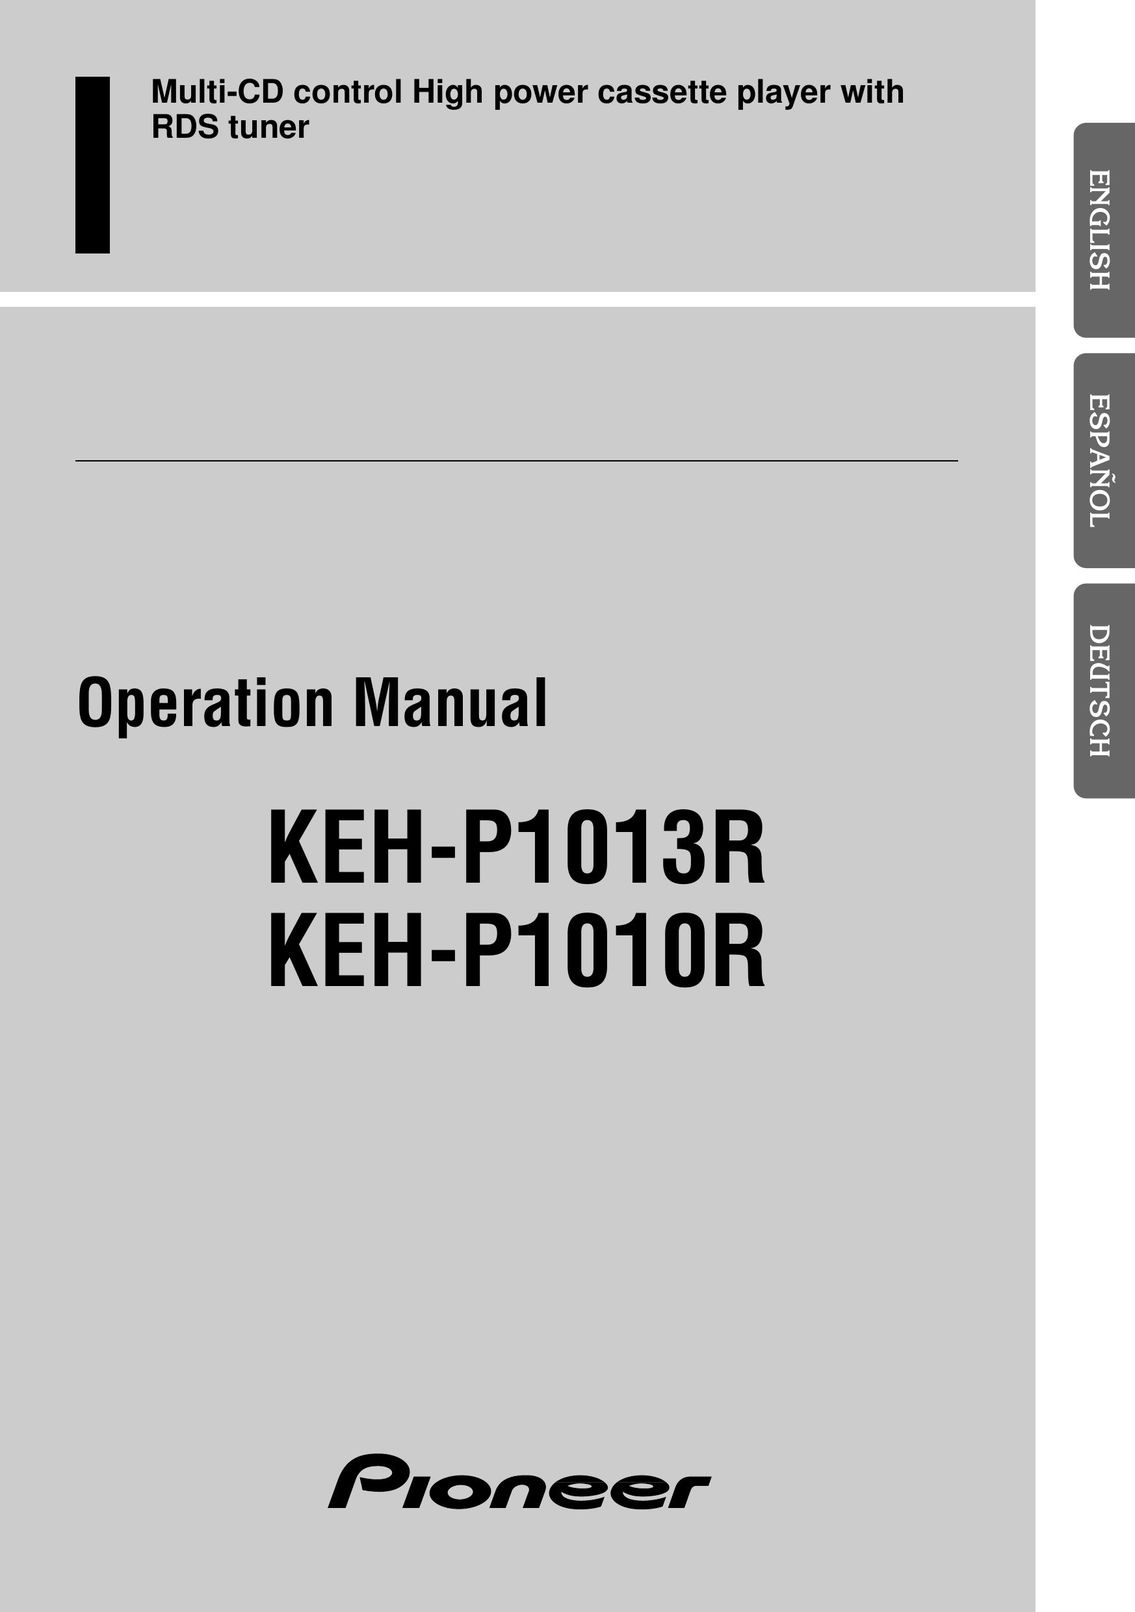 Pioneer KEH-P1010R Cassette Player User Manual